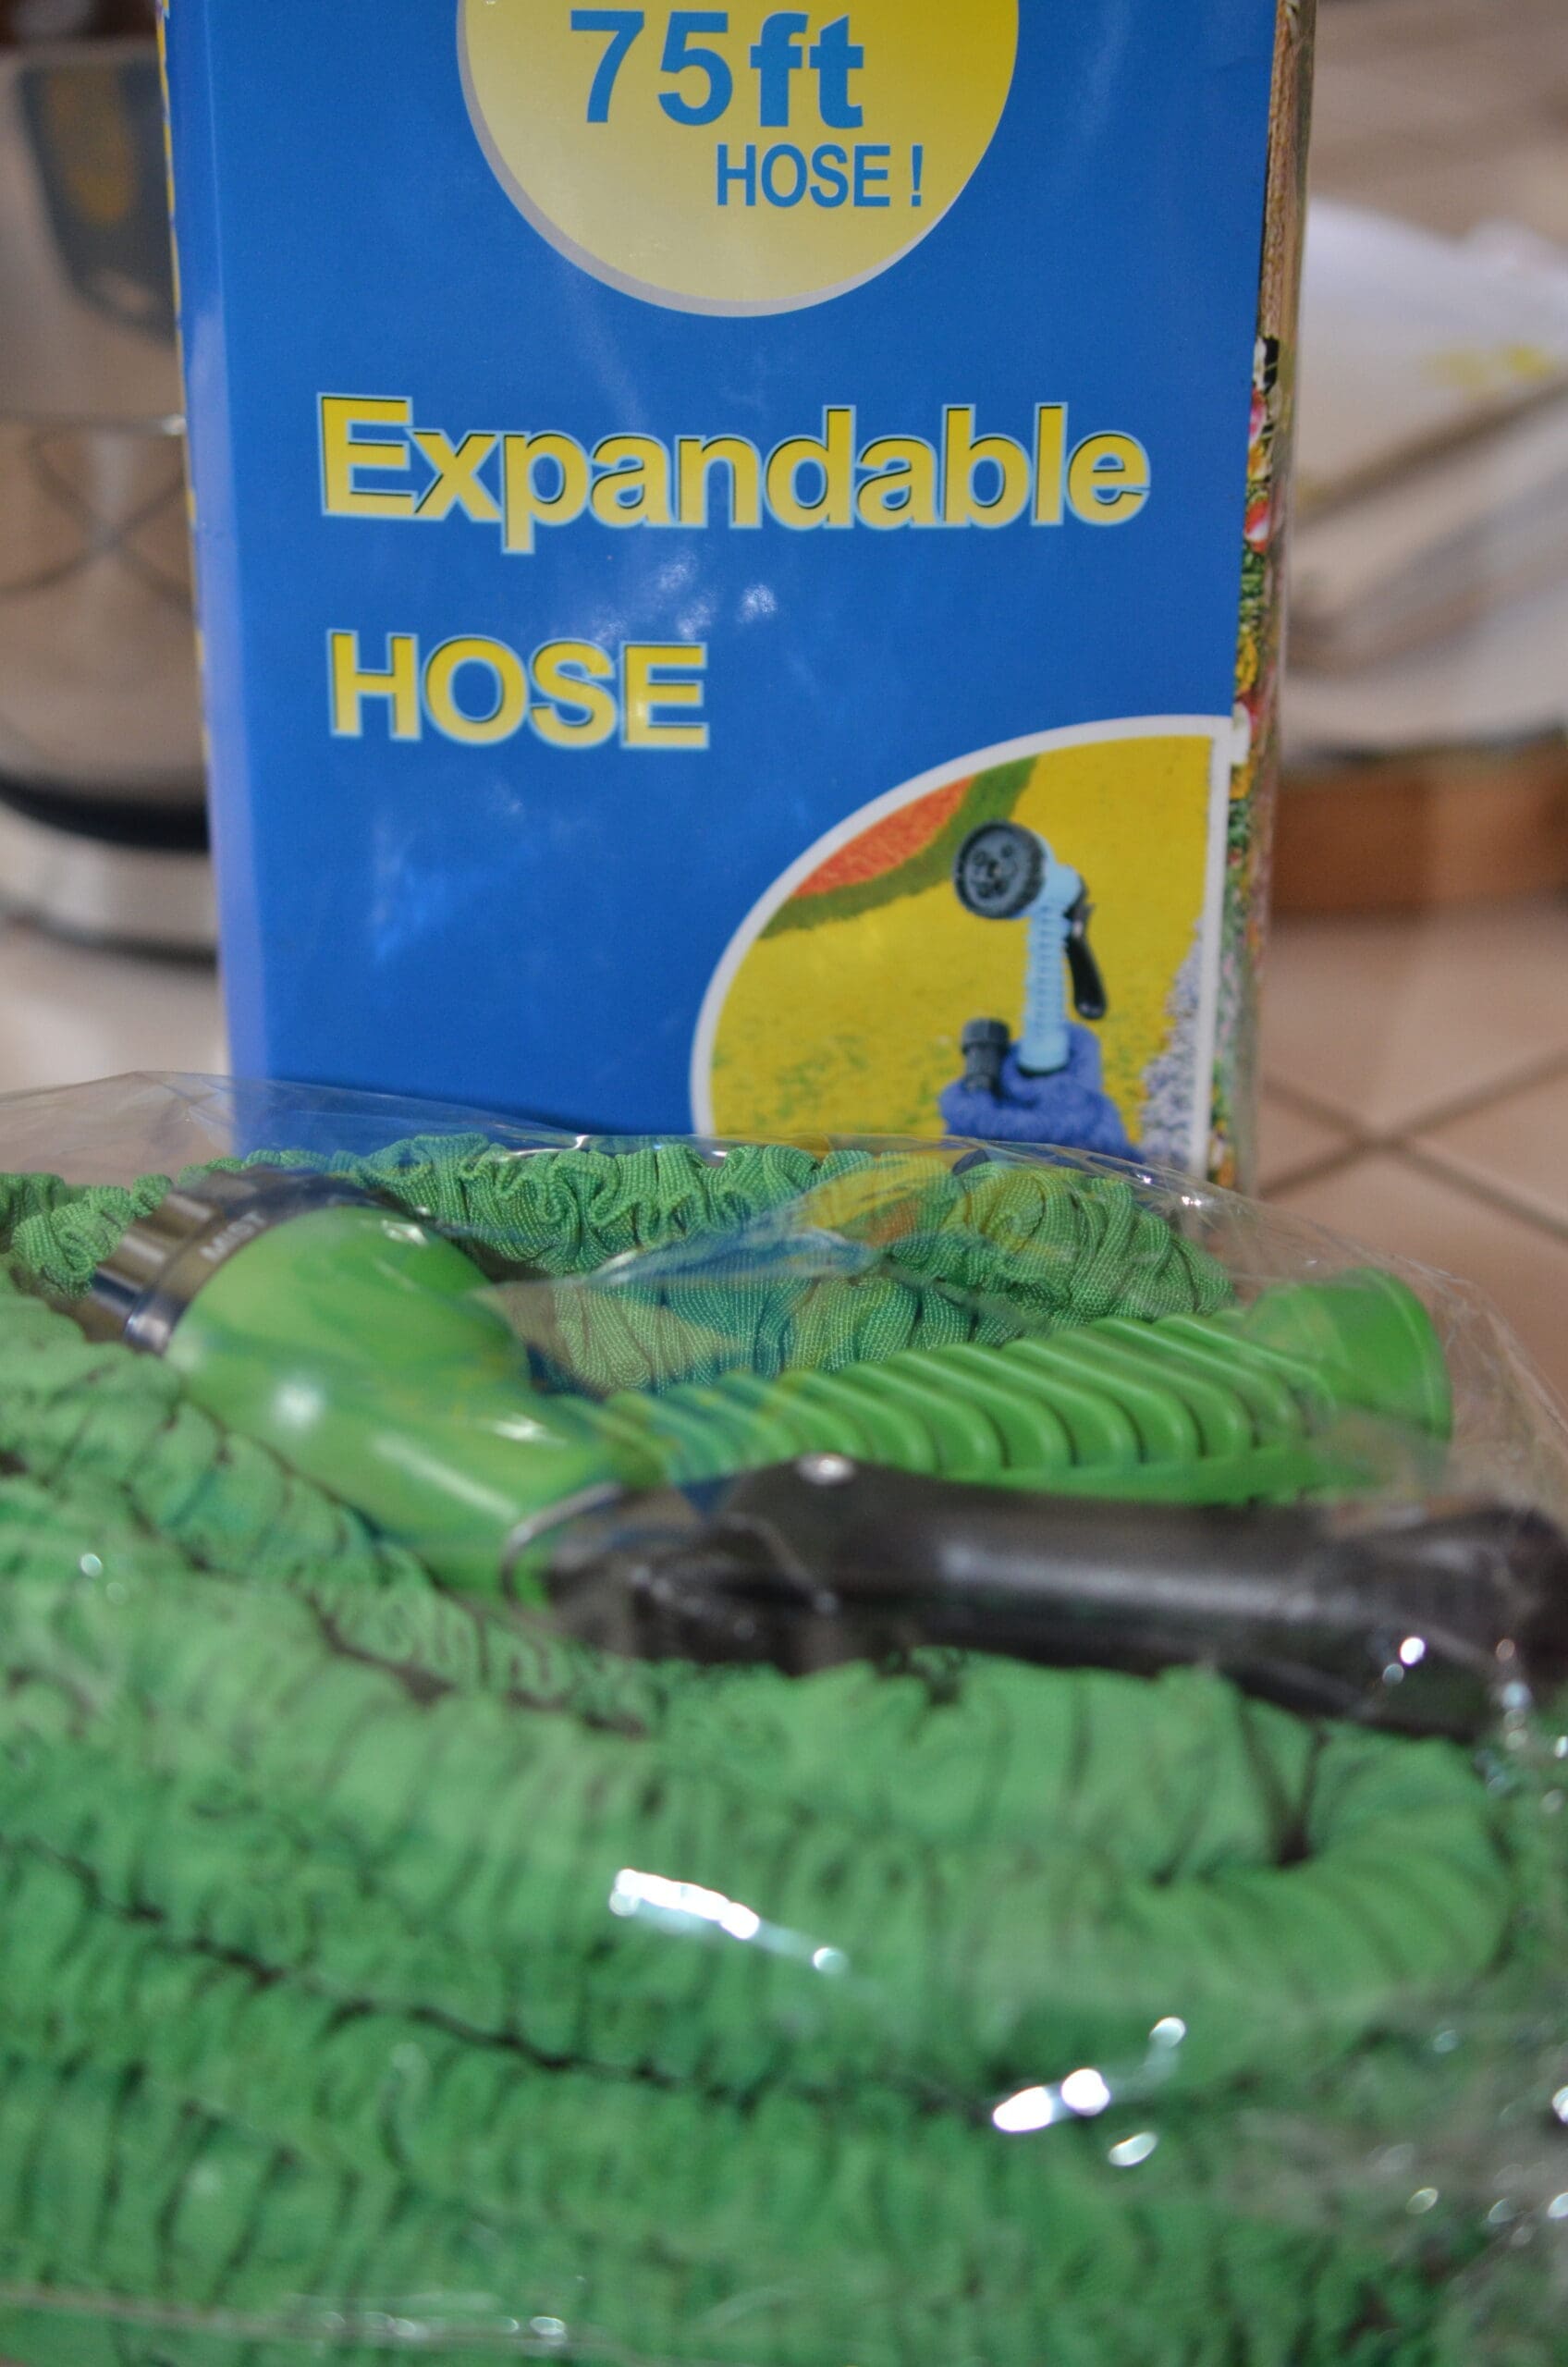 Expandable hose